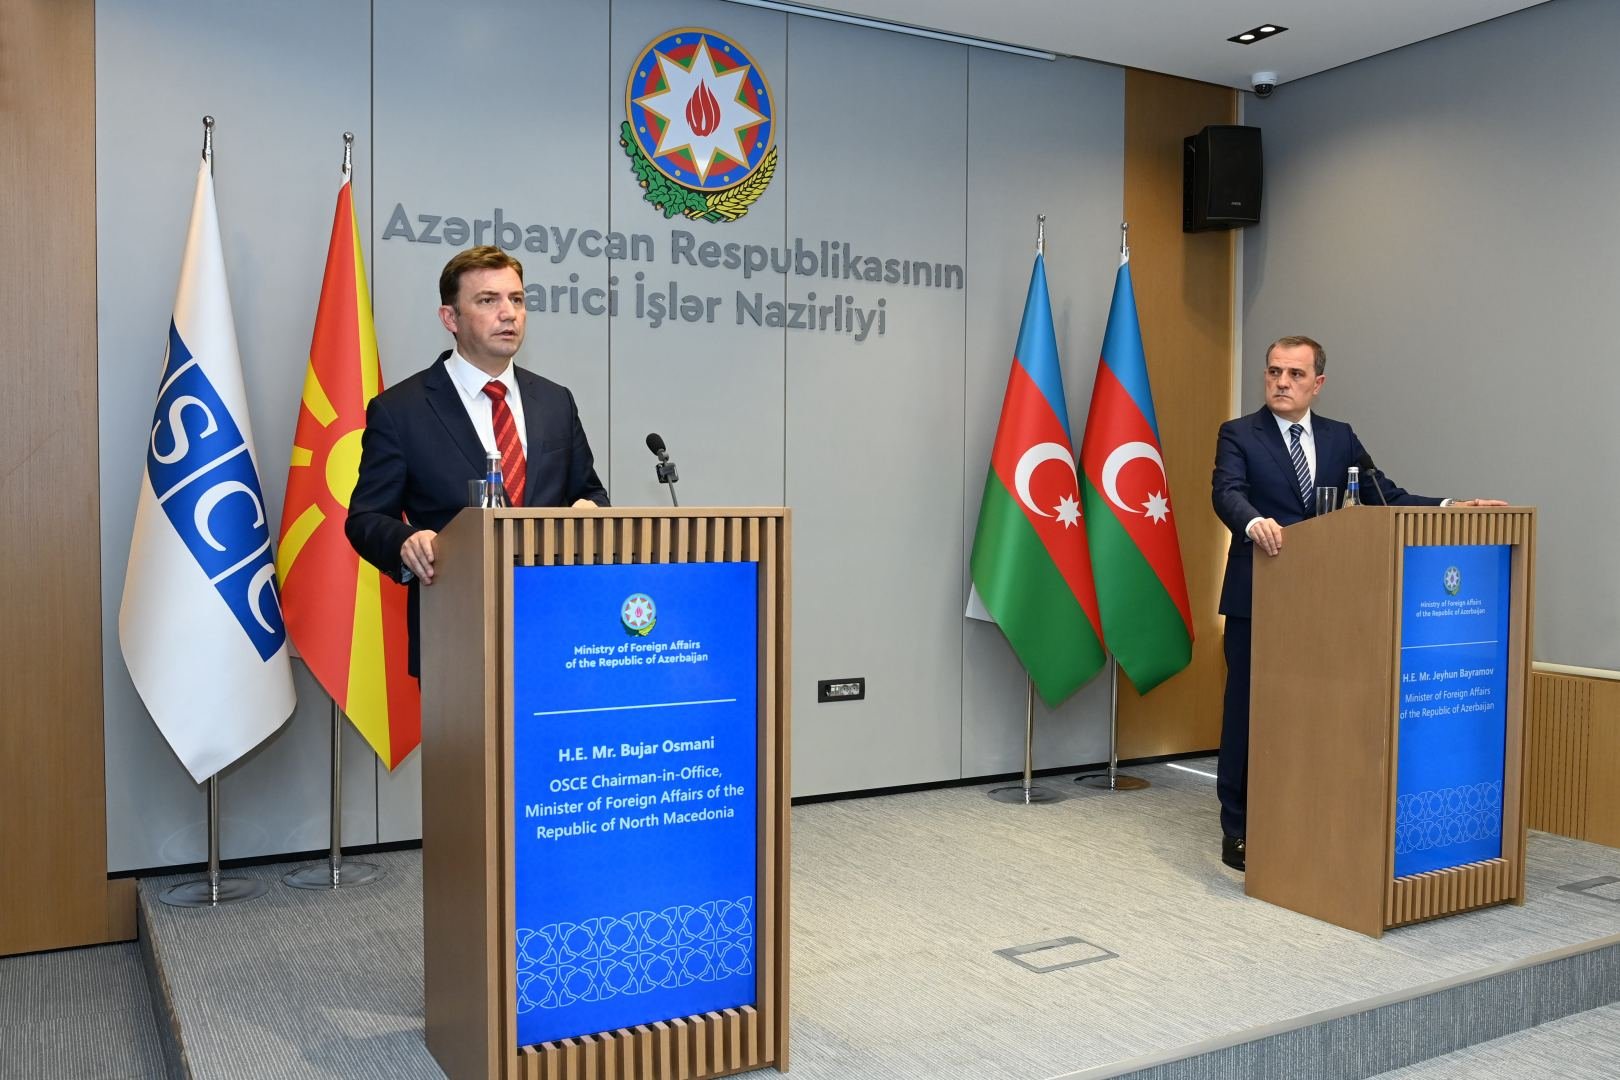 Azerbaijani FM, Chairman of OSCE discuss comprehensive issues